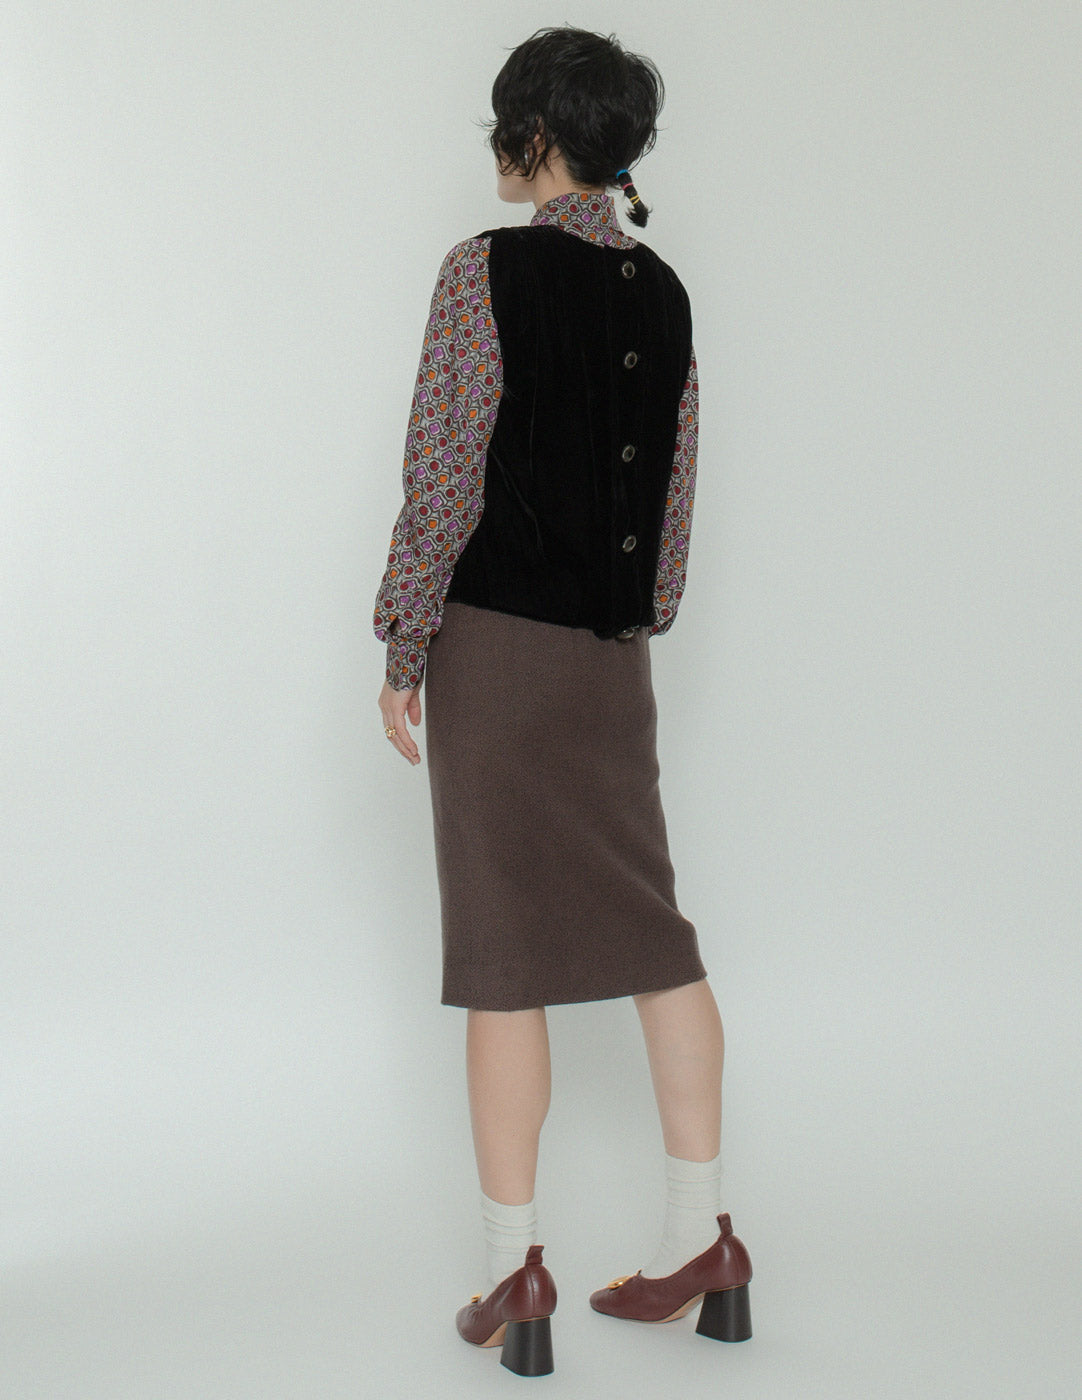 Lanvin vintage velvet and wool dress back view